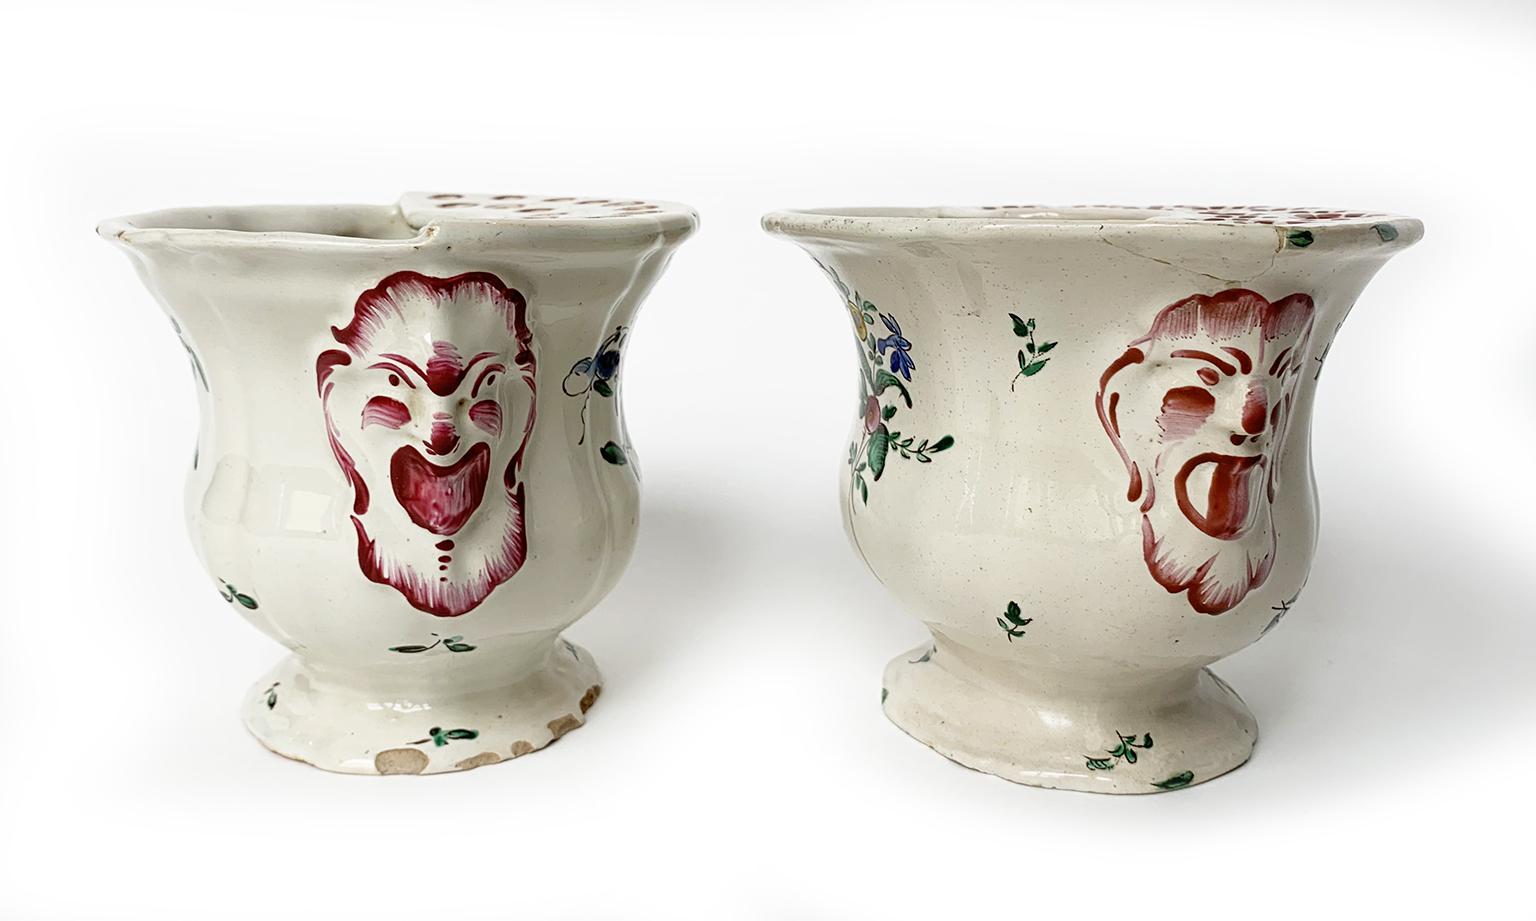 Glazed Pair of Italian Maiolica Flower Pots, Antonio Ferretti, Lodi, circa 1770 – 1780